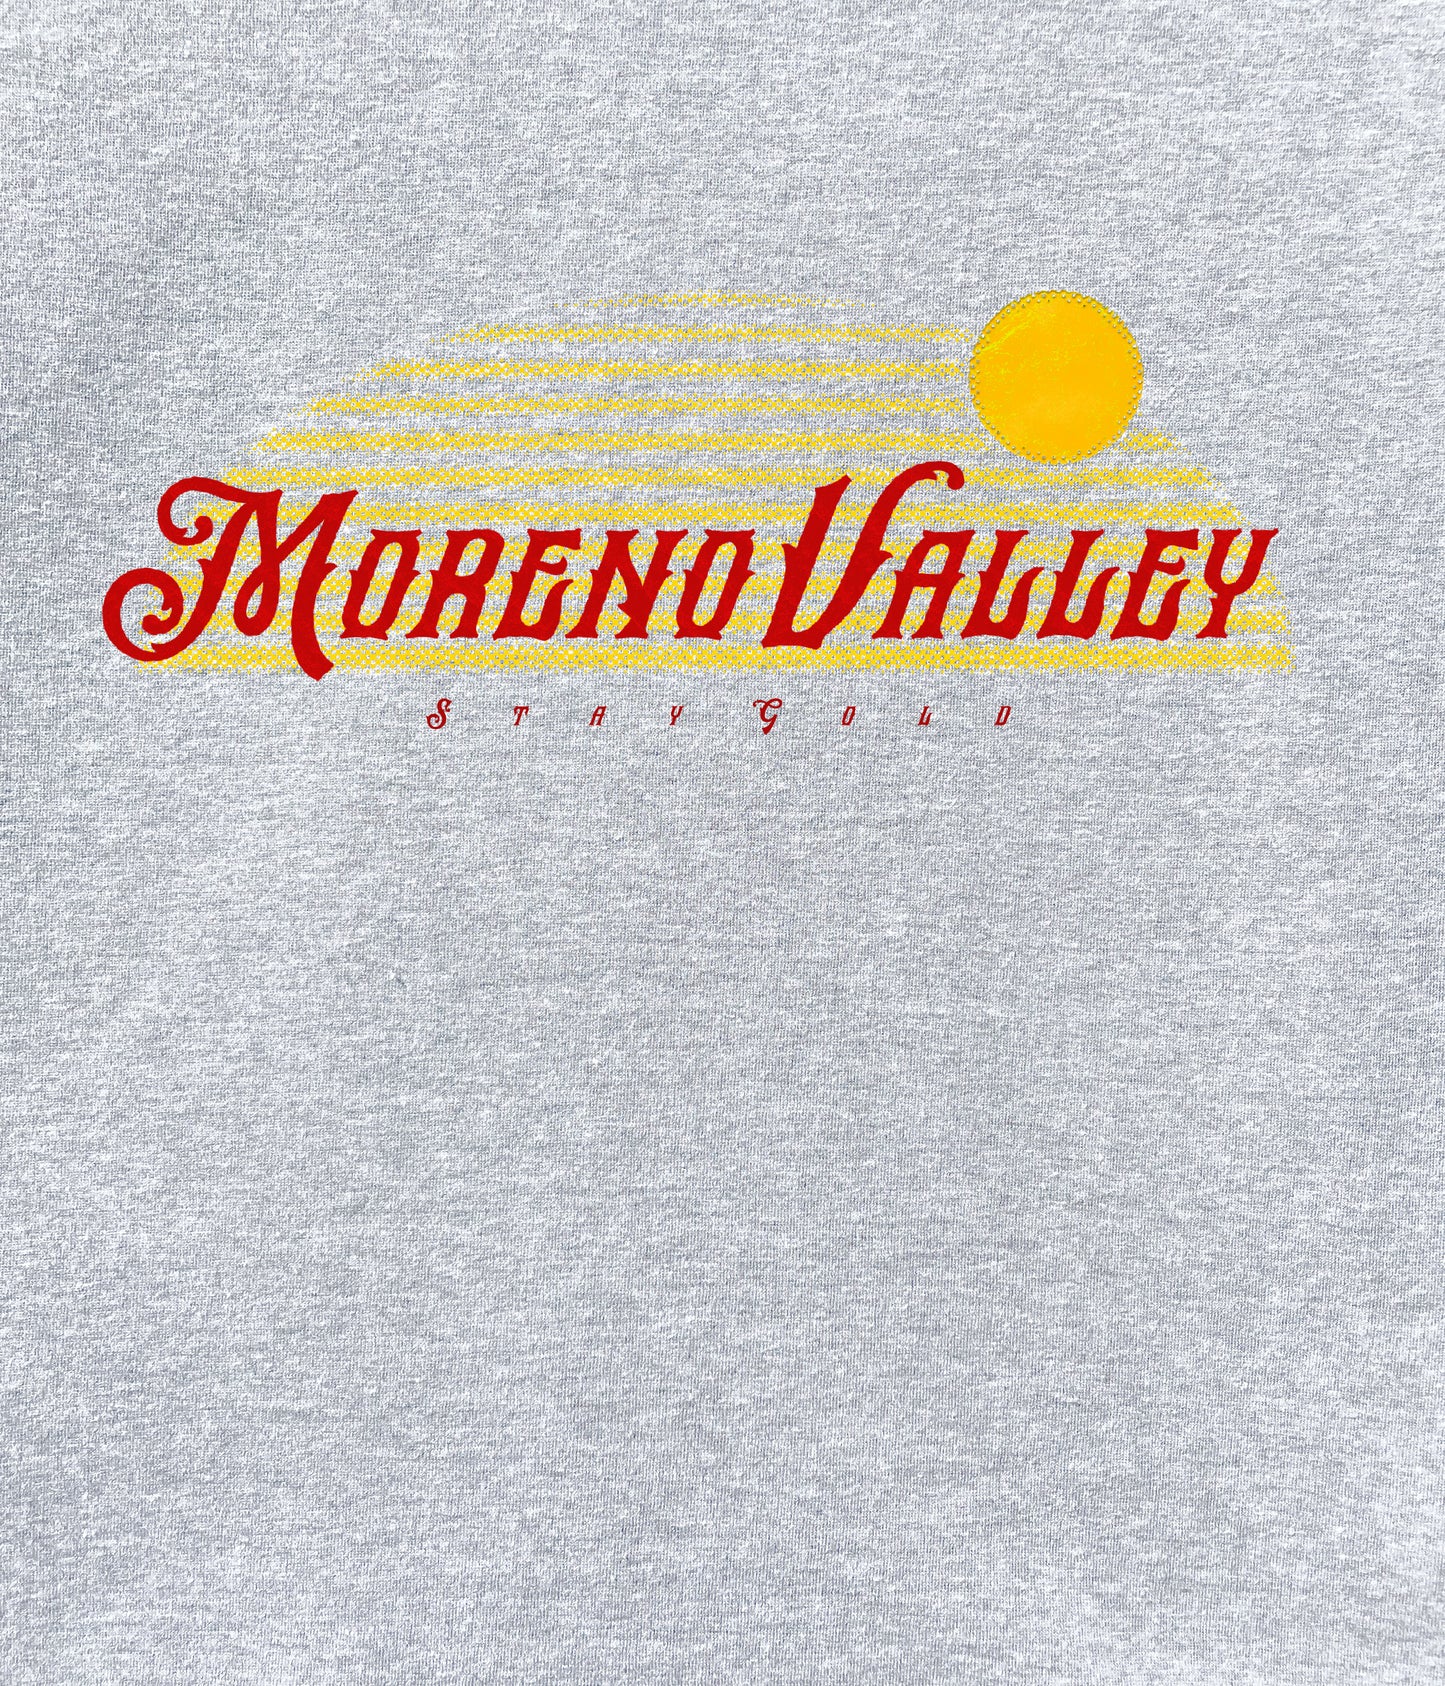 Moreno Valley Stay Gold